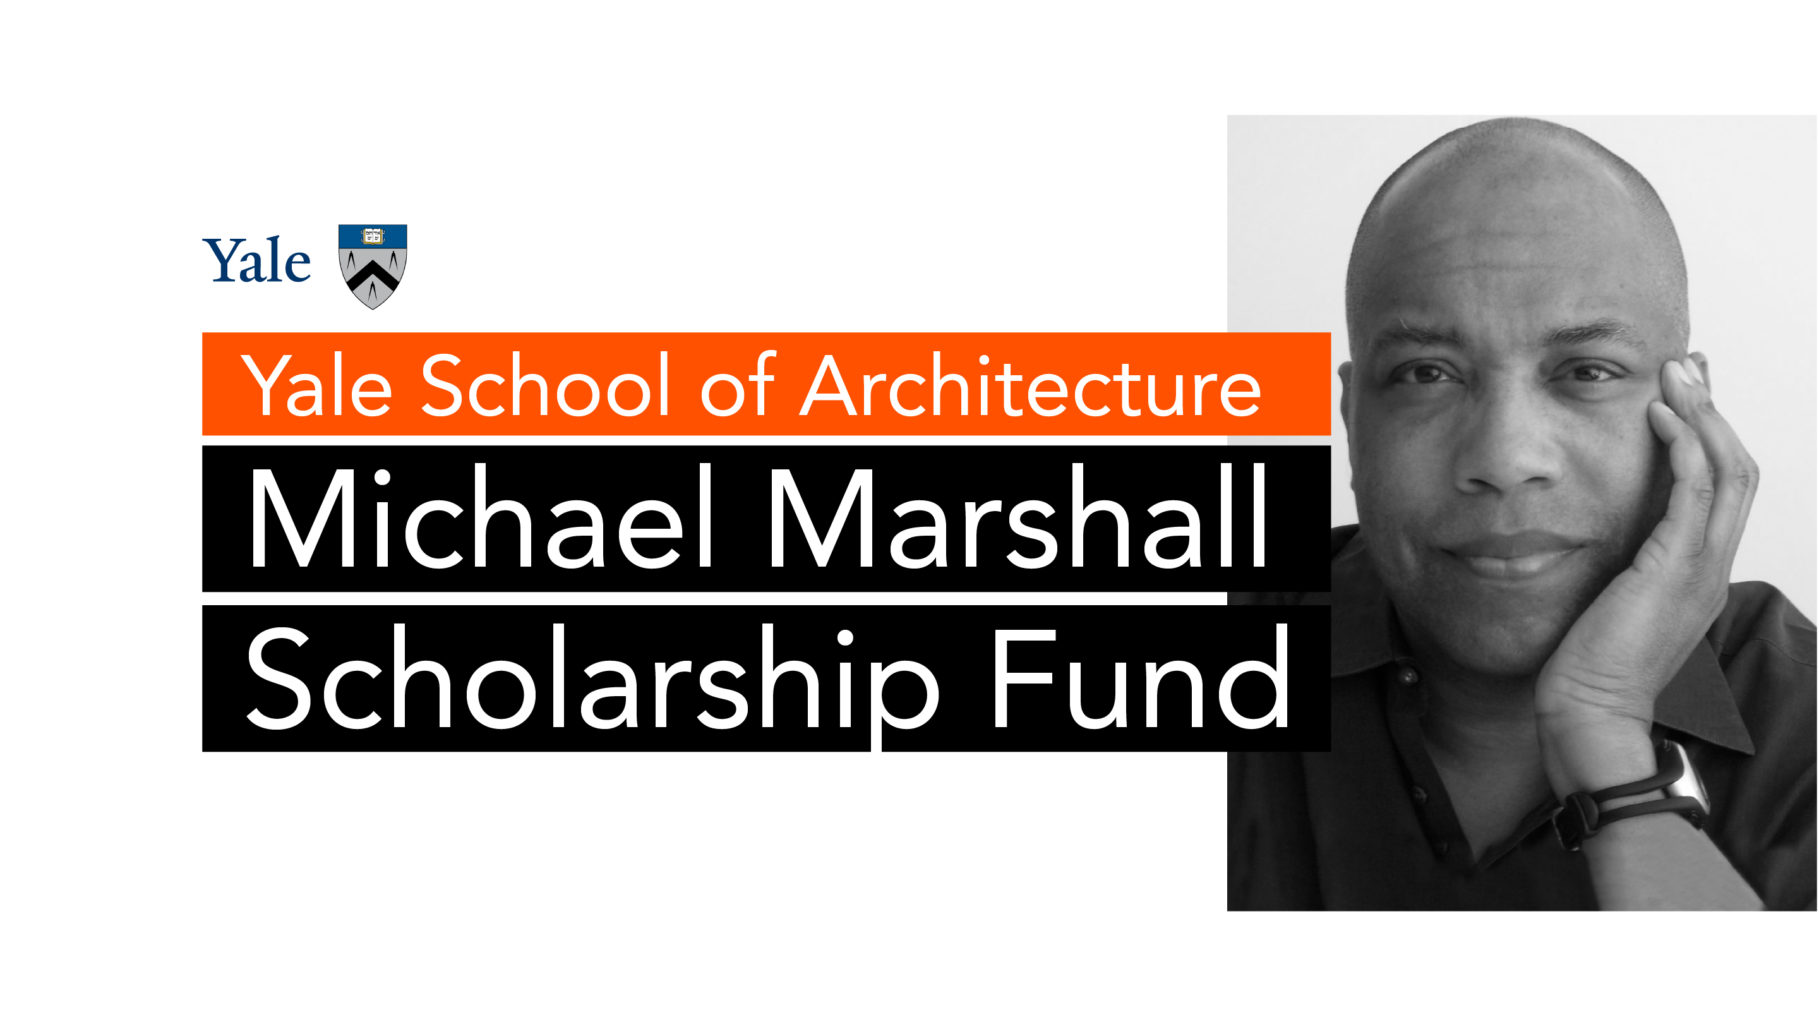 Architect Michael Marshall, FAIA, NOMA, NCARB Establishes Scholarship Fund at Yale University School of Architecture